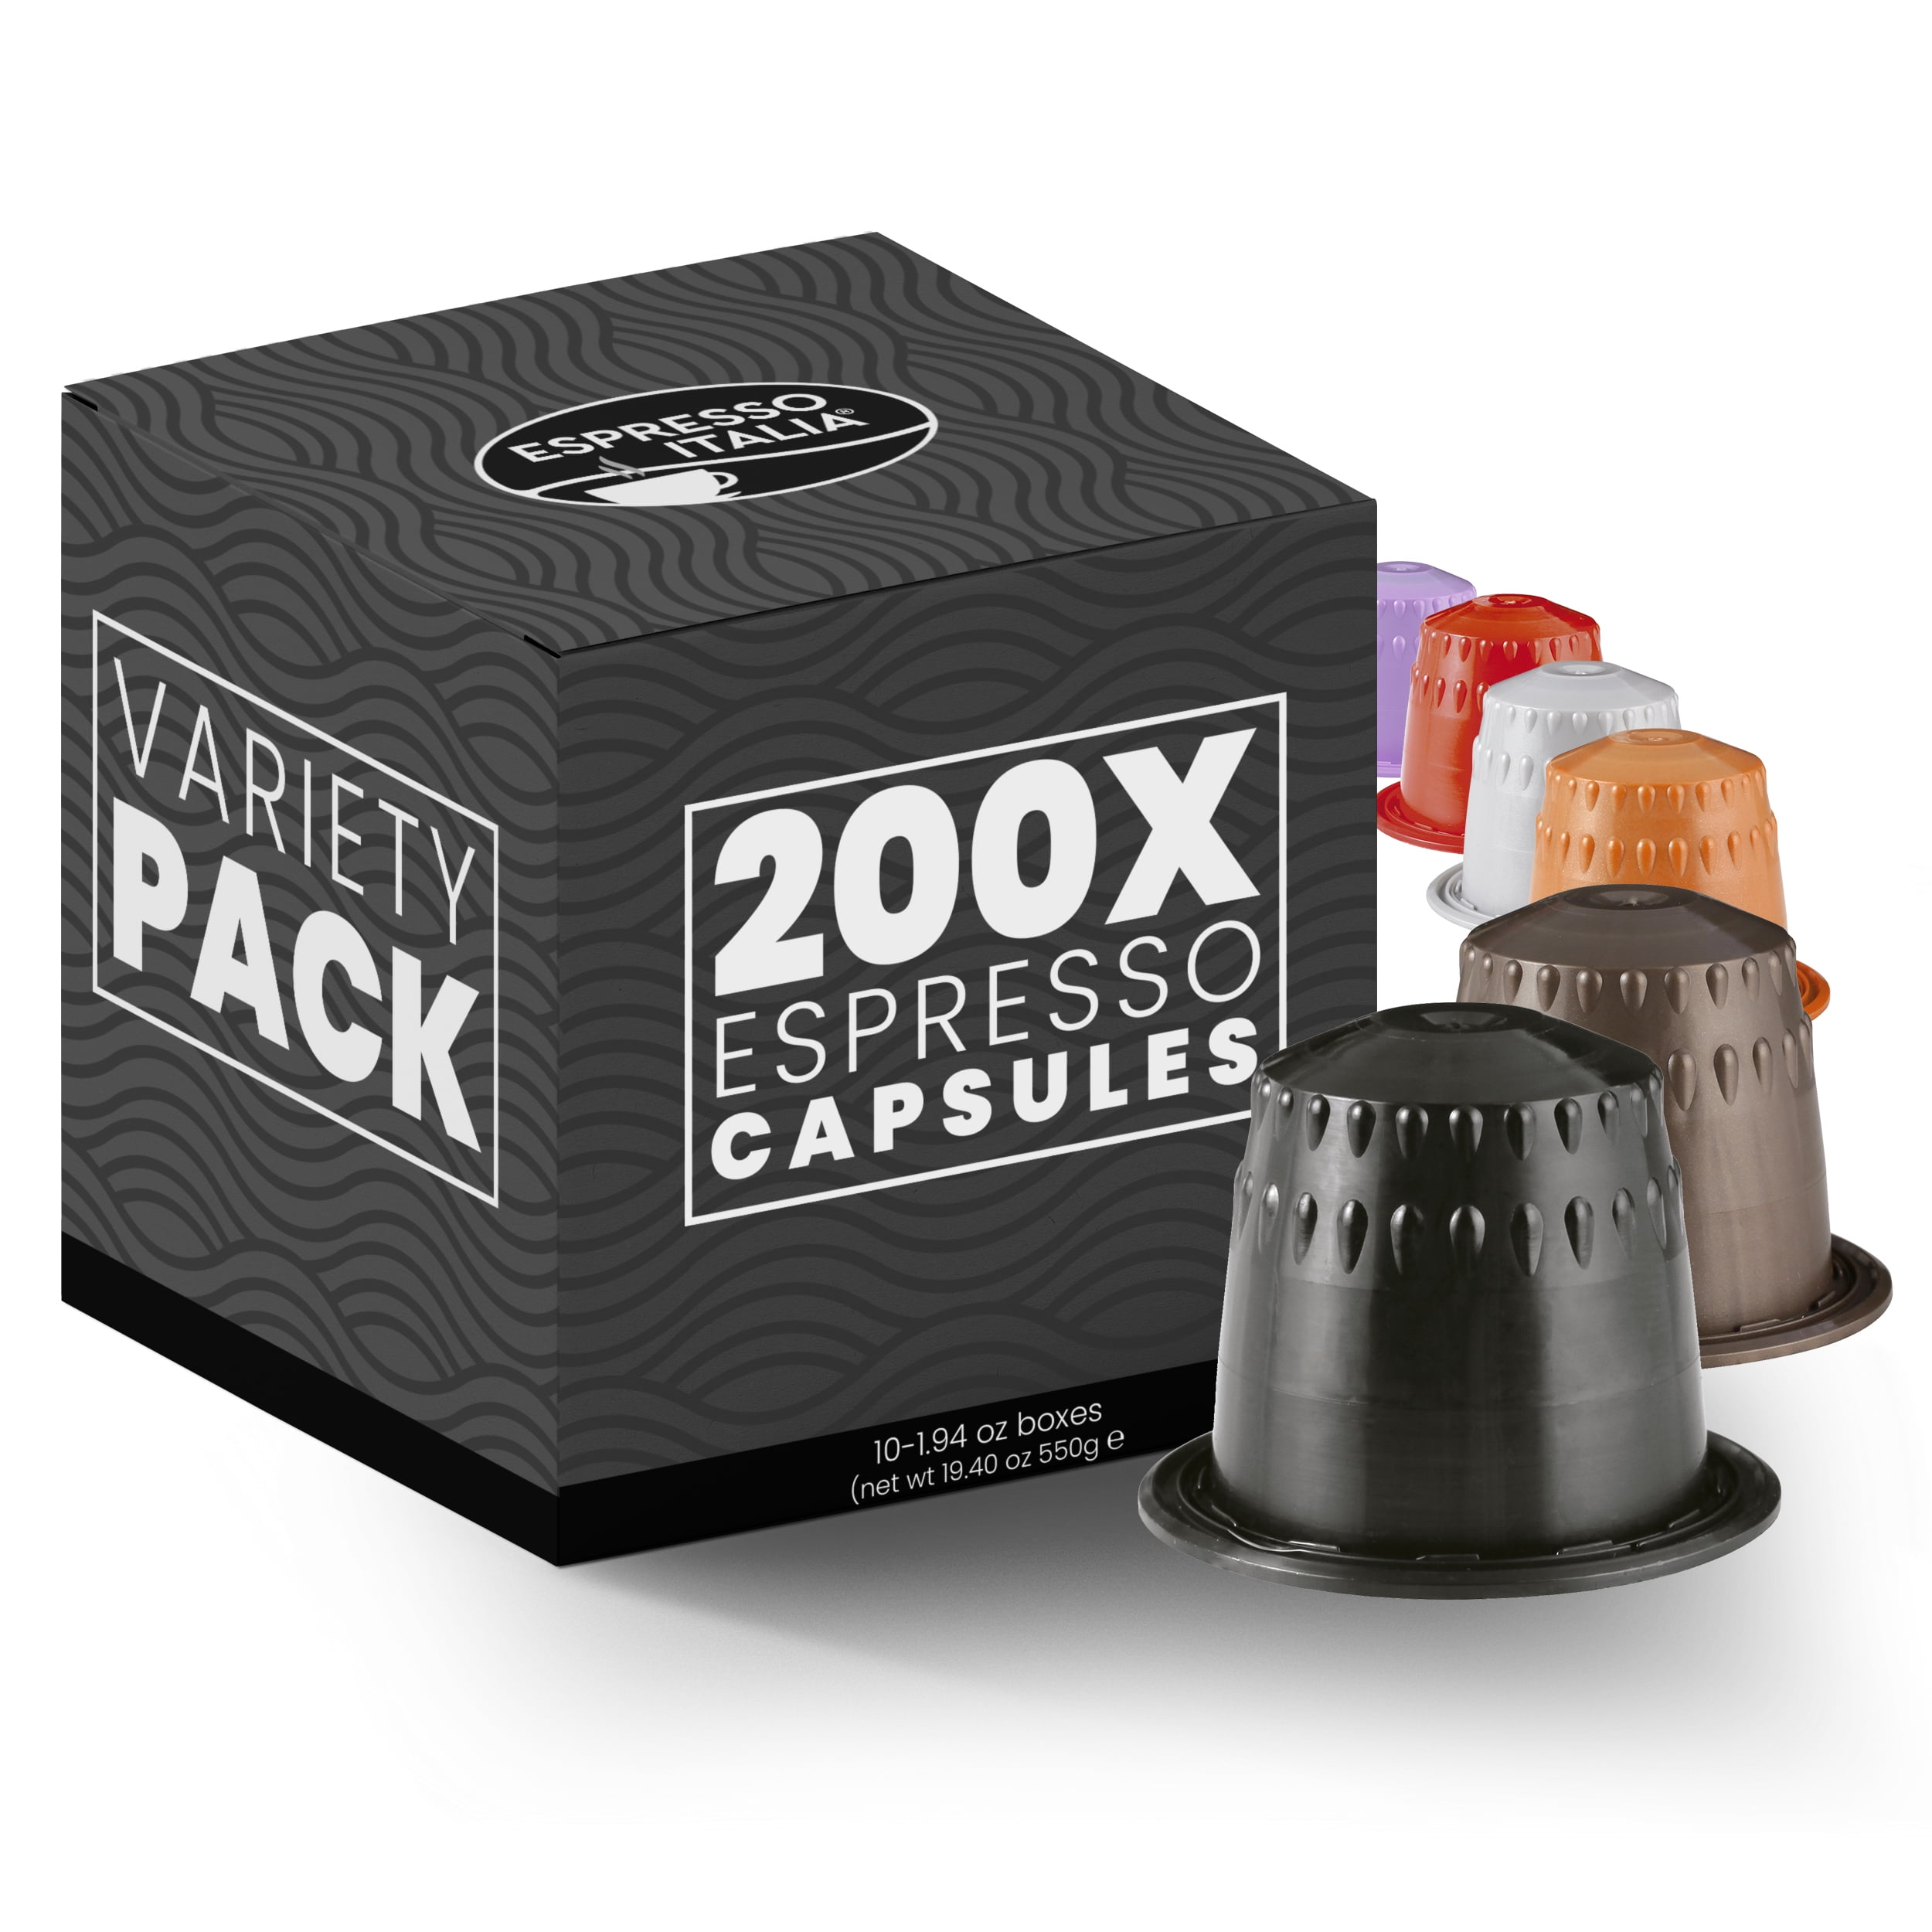 Nespresso Vertuoline 200 Capsule Vertuo Assortment : : Grocery